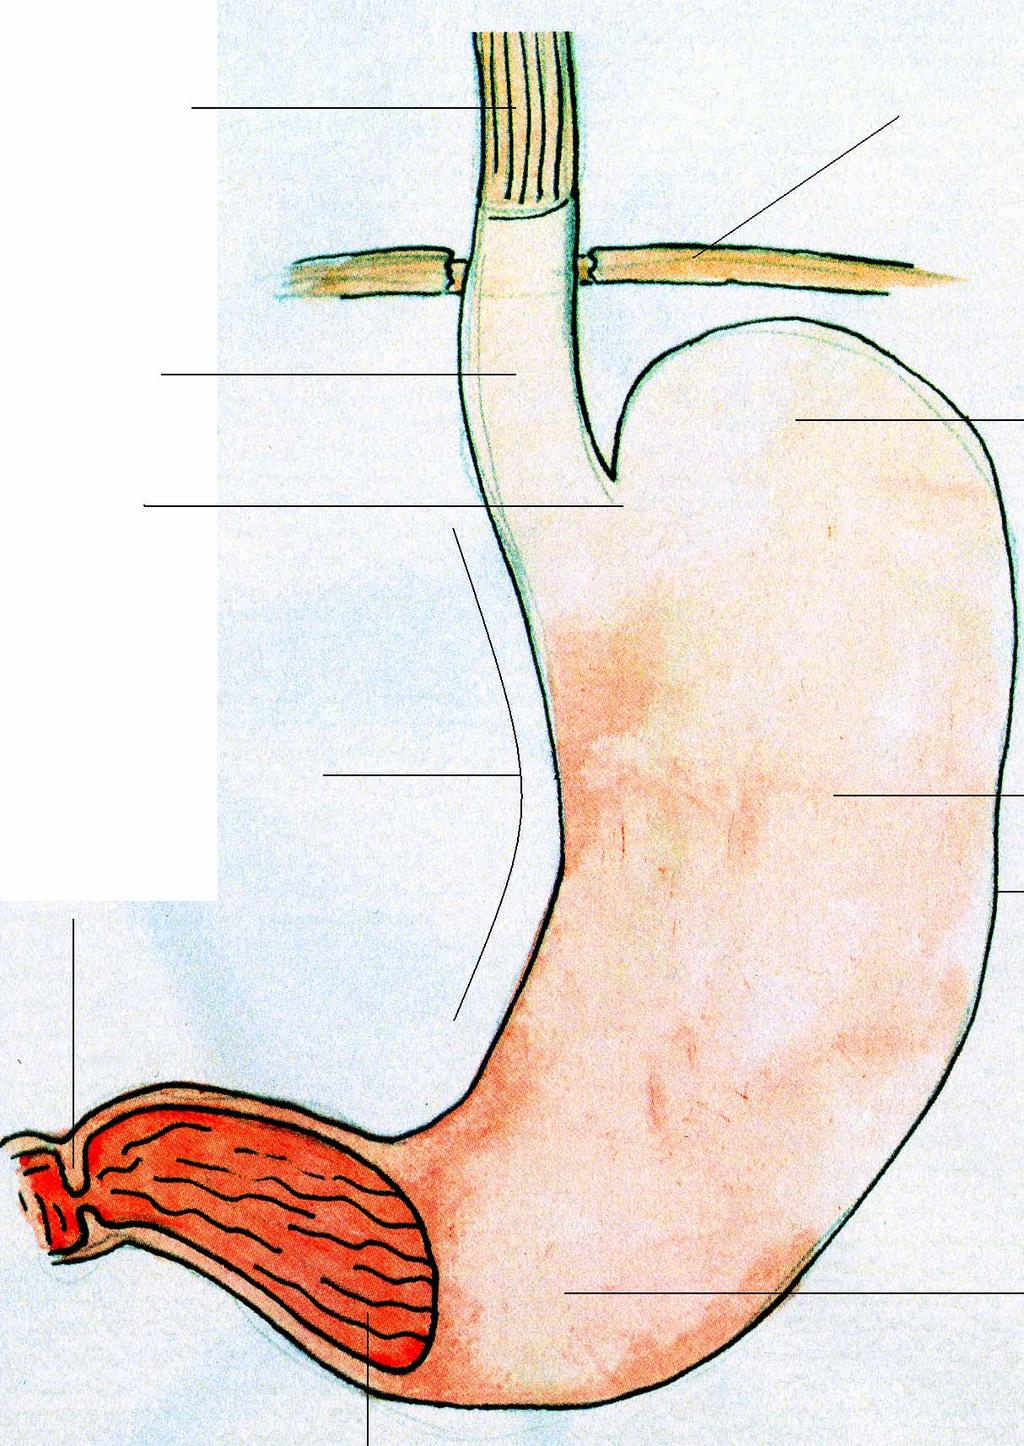 De slokdarm/esofagus Pars thoracalis Het middenrif De maag Pars abdominalis de fundus kardia De